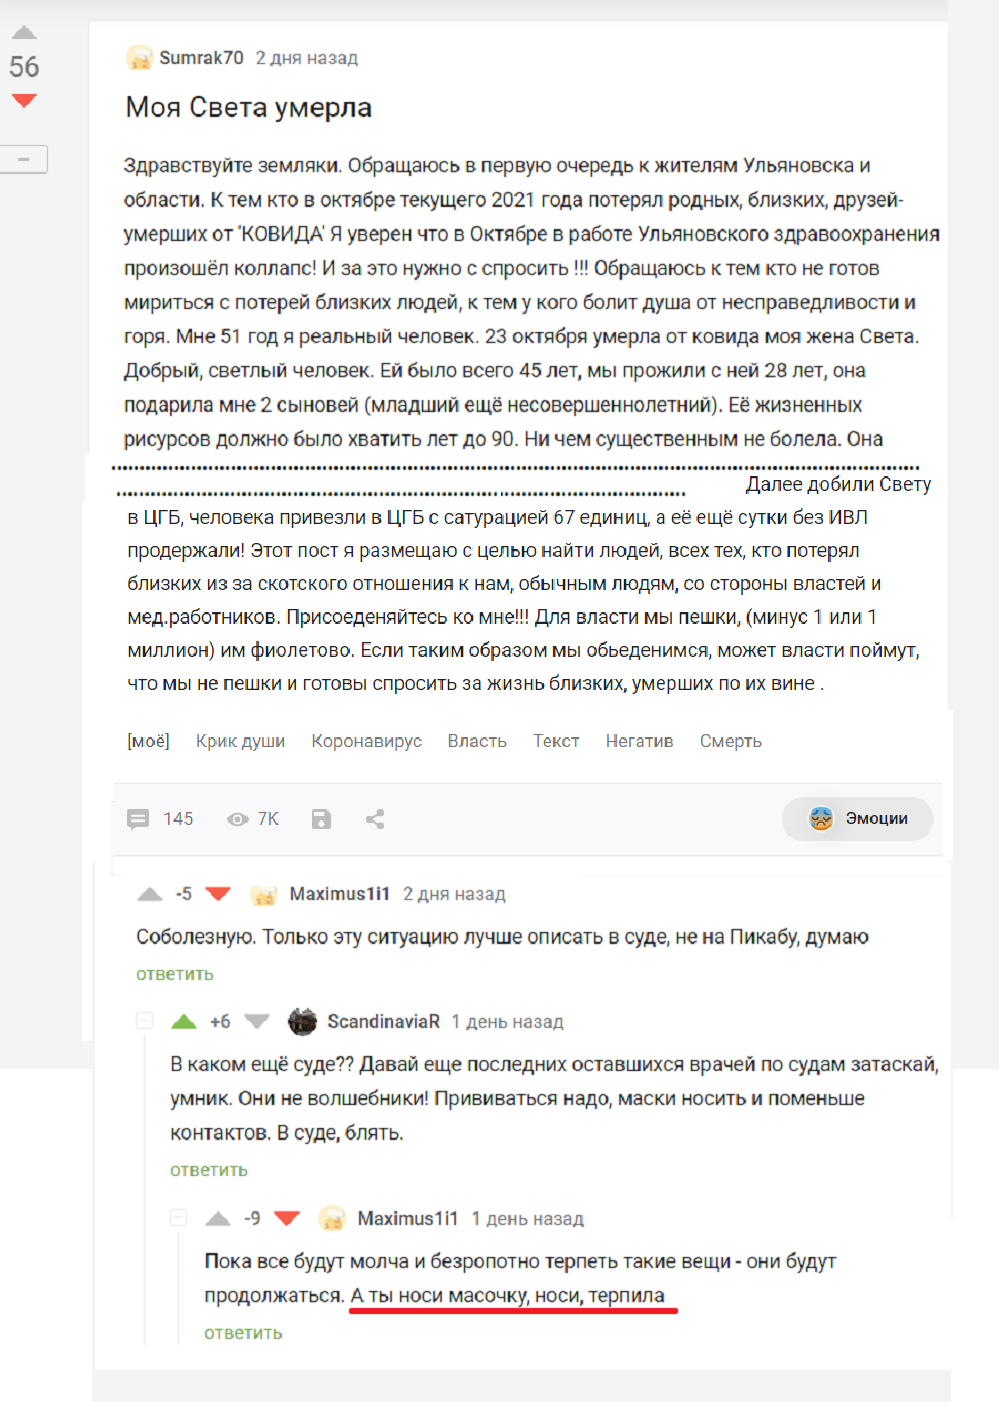 The main cause of Russia's problems - Coronavirus, Pandemic, Vaccine, Society, Comments on Peekaboo, Screenshot